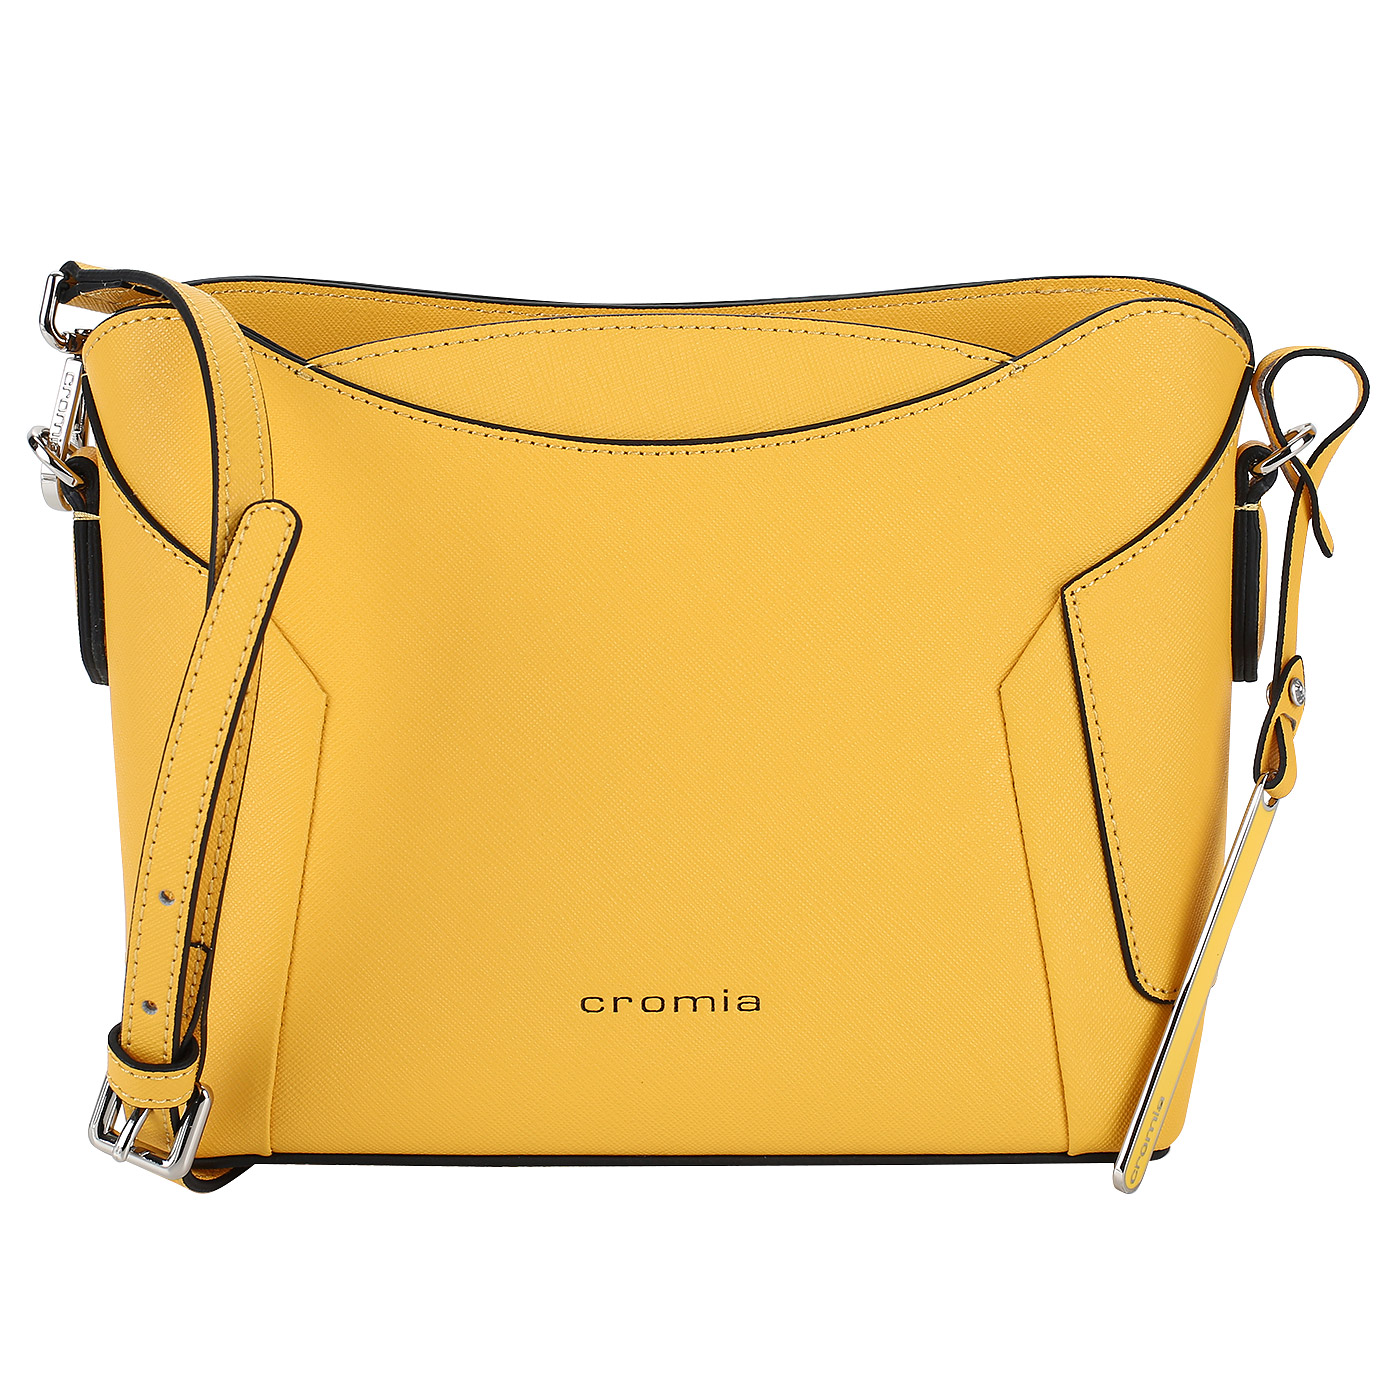 Cromia Женская сумочка из сафьяна